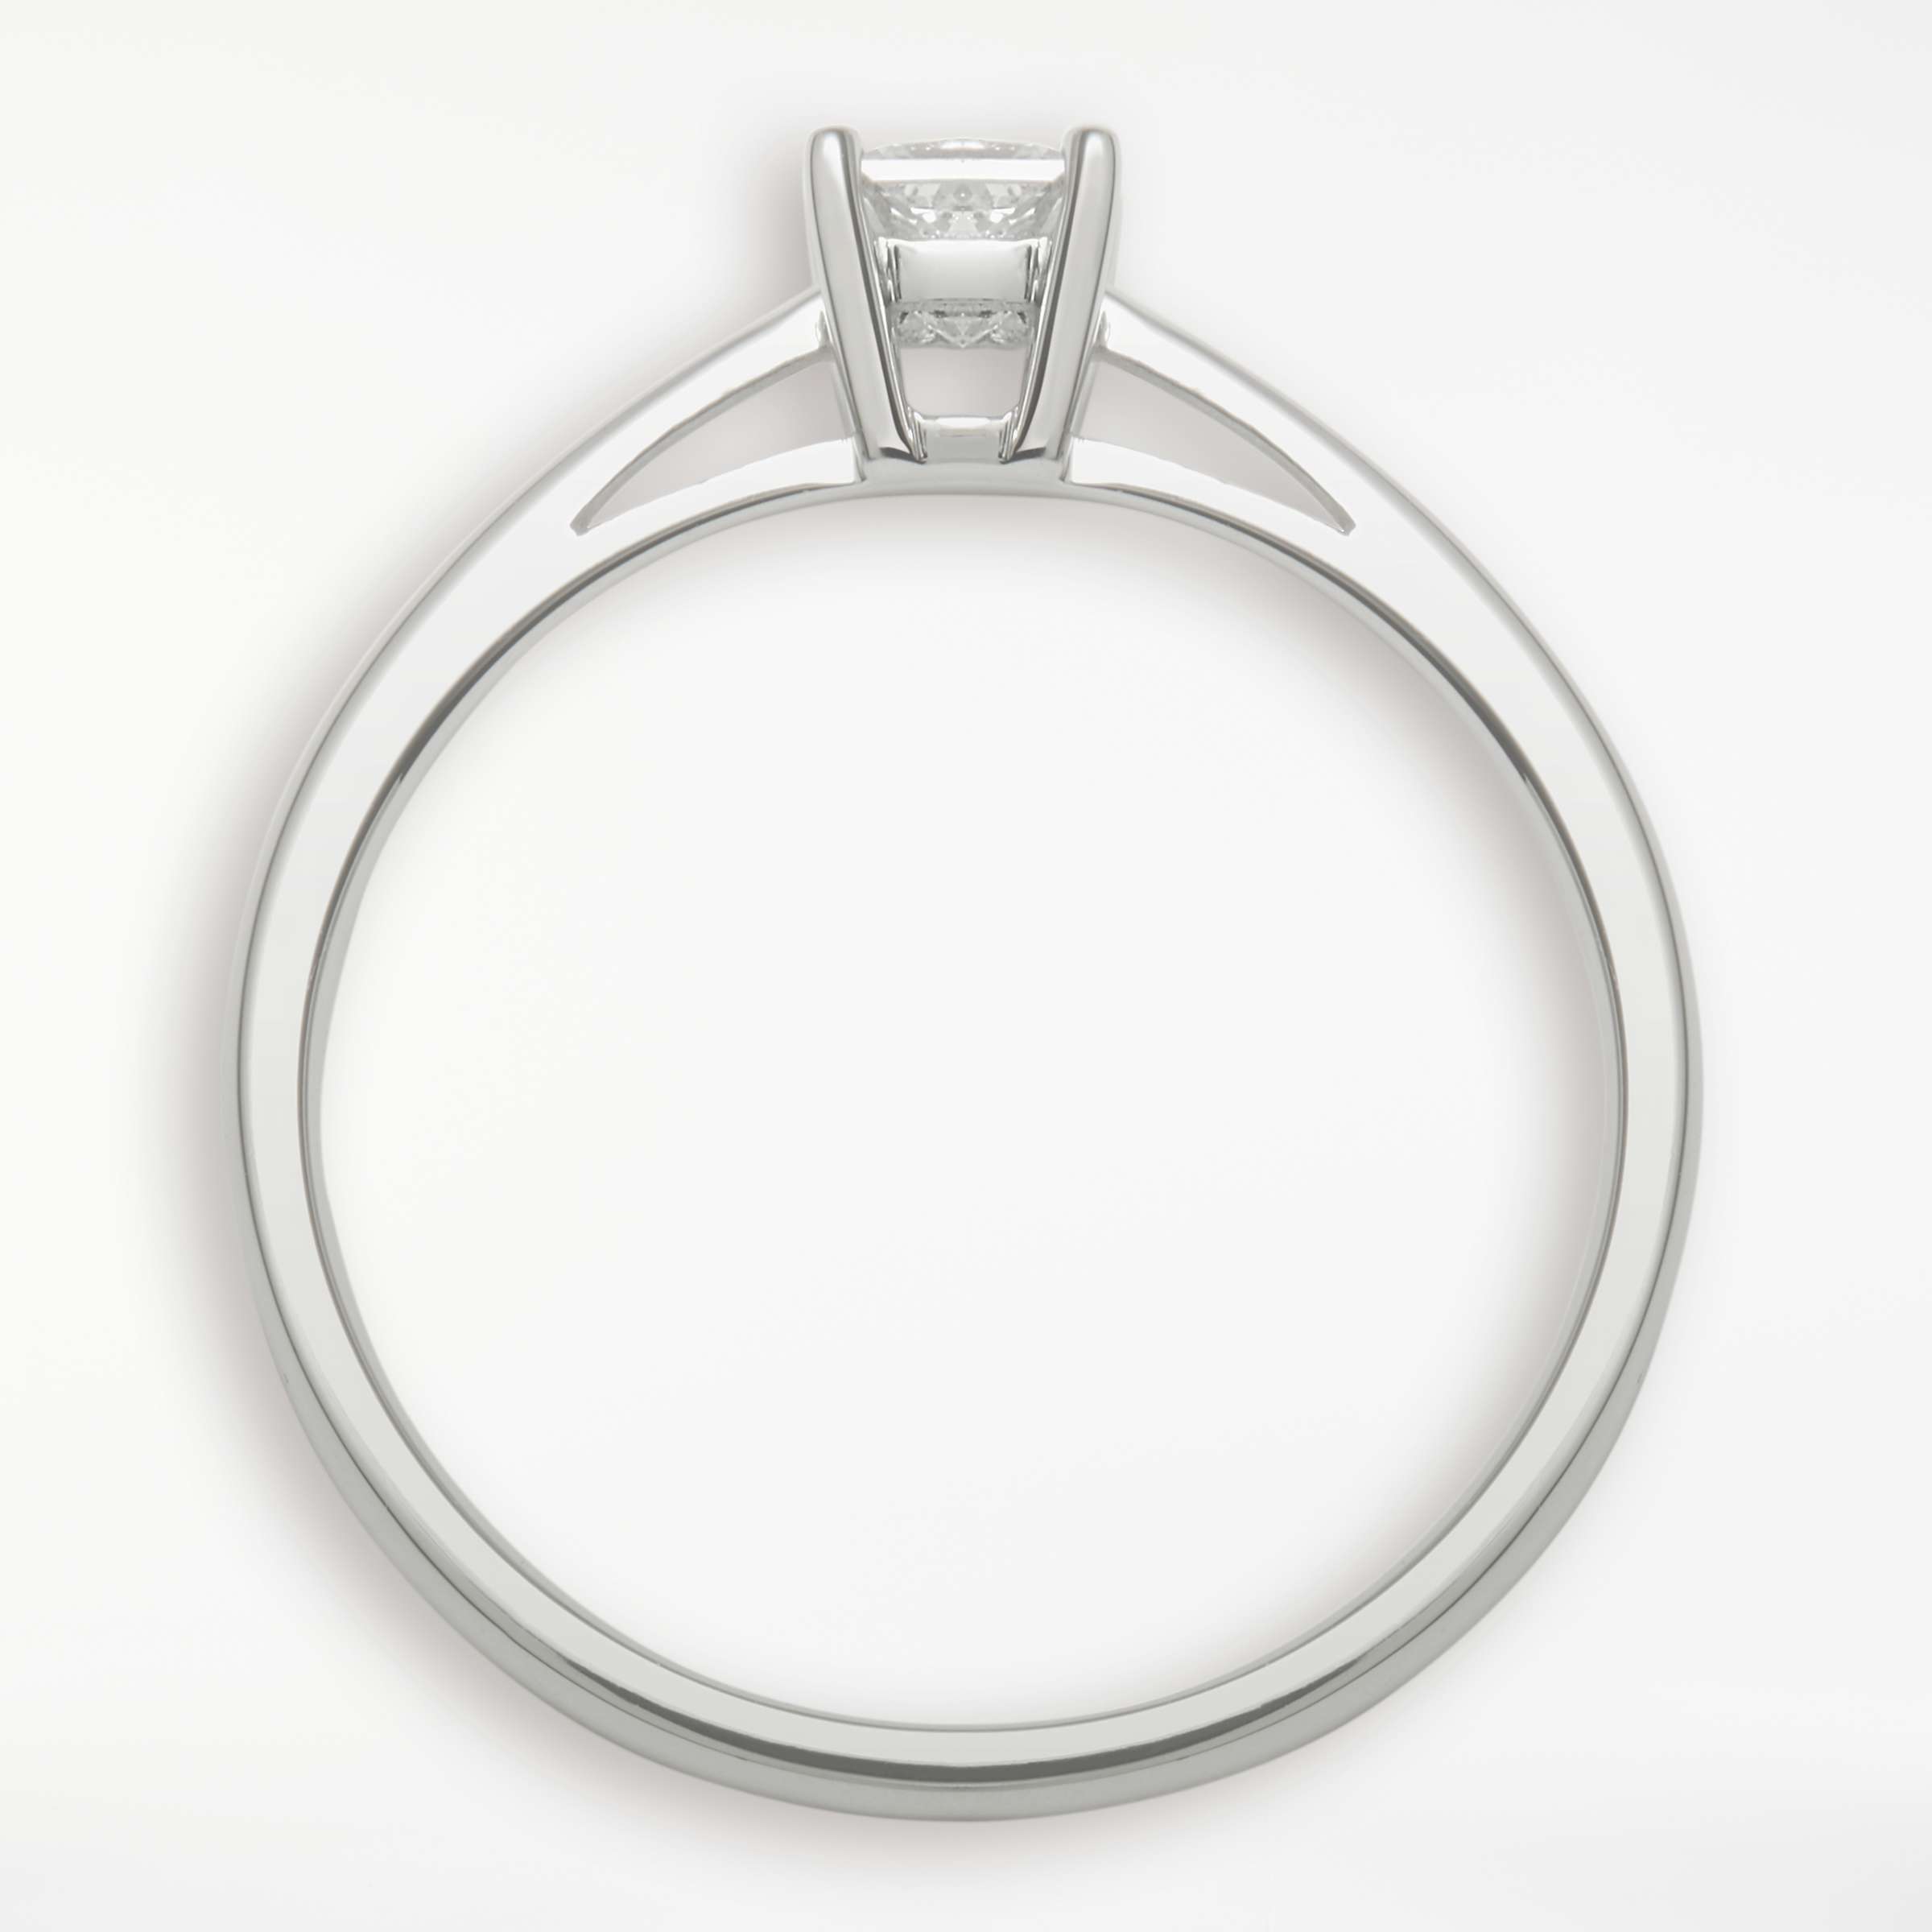 Buy Mogul 18ct White Gold Princess Cut Diamond Engagement Ring, 0.33ct Online at johnlewis.com